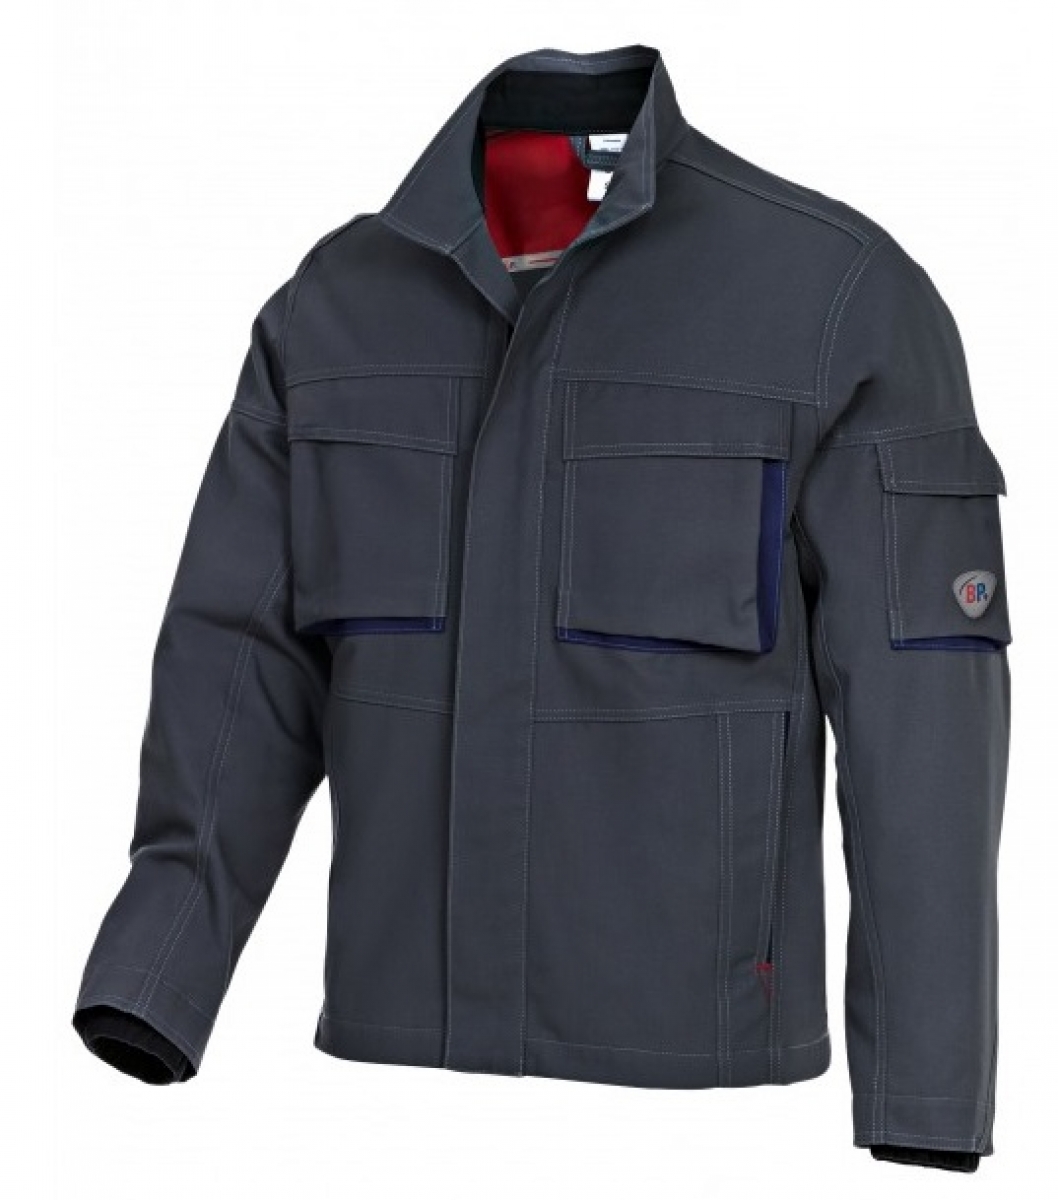 BP-Workwear, Arbeitsjacke, ca. 305g/m, anthrazit/nachtblau